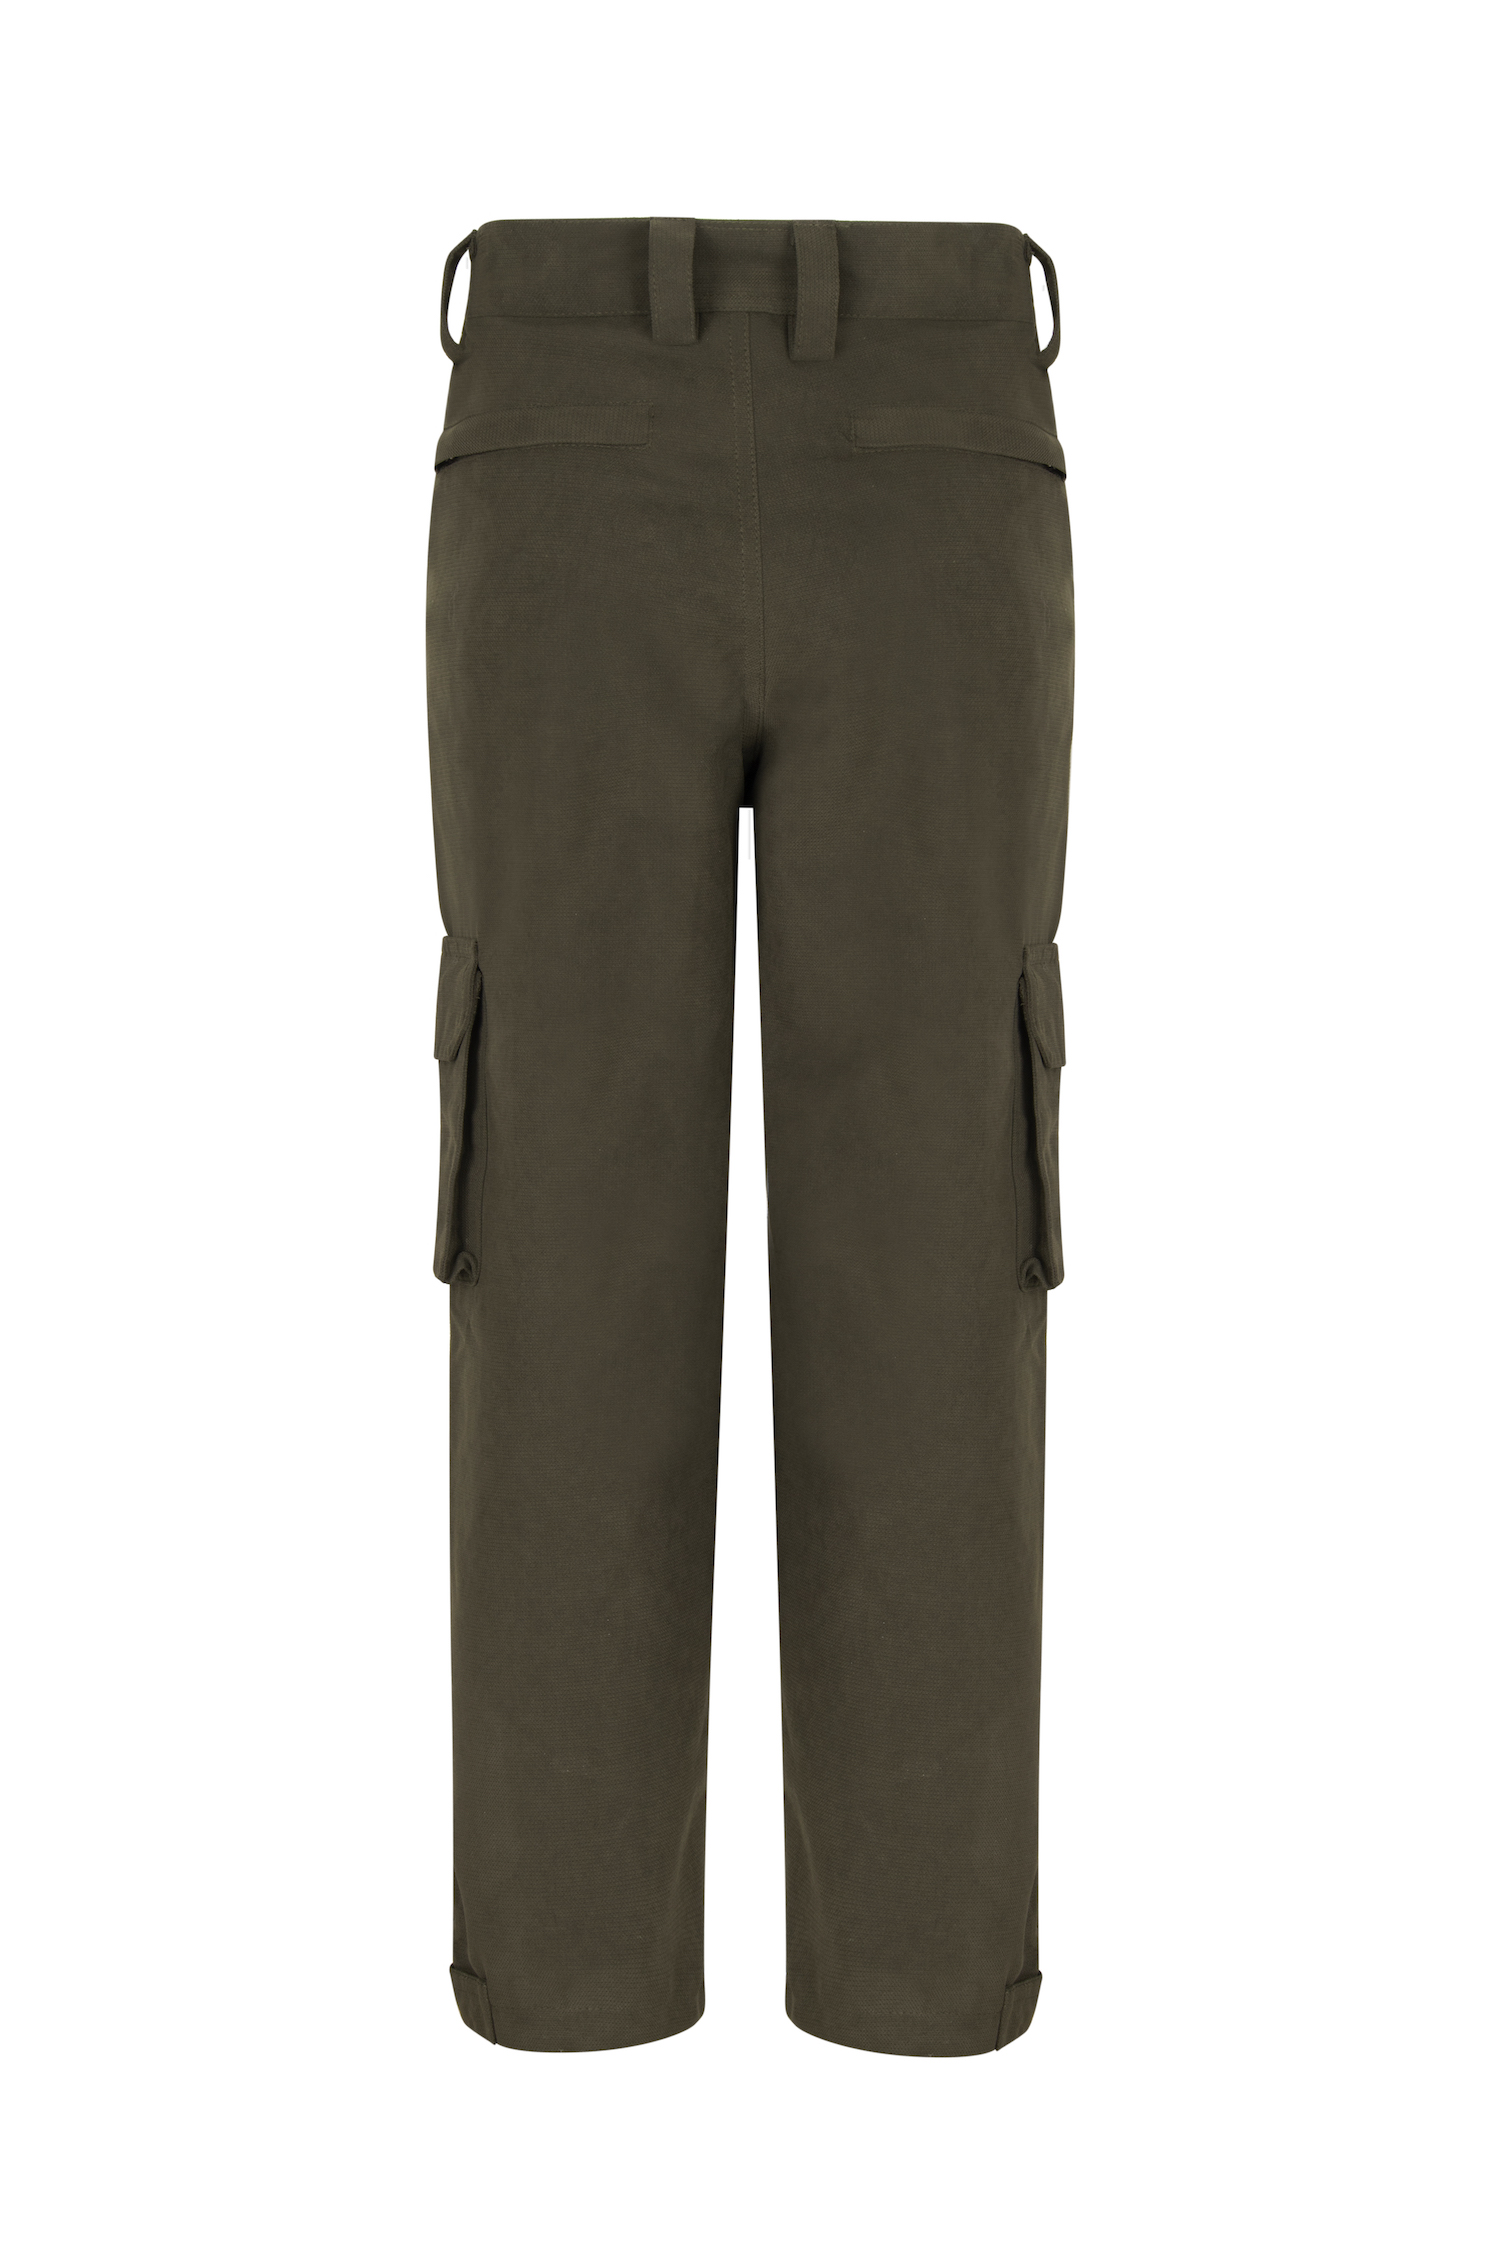 Hoggs Of Fife Kids Struther Trousers - Green - Edinburgh Outdoor Wear